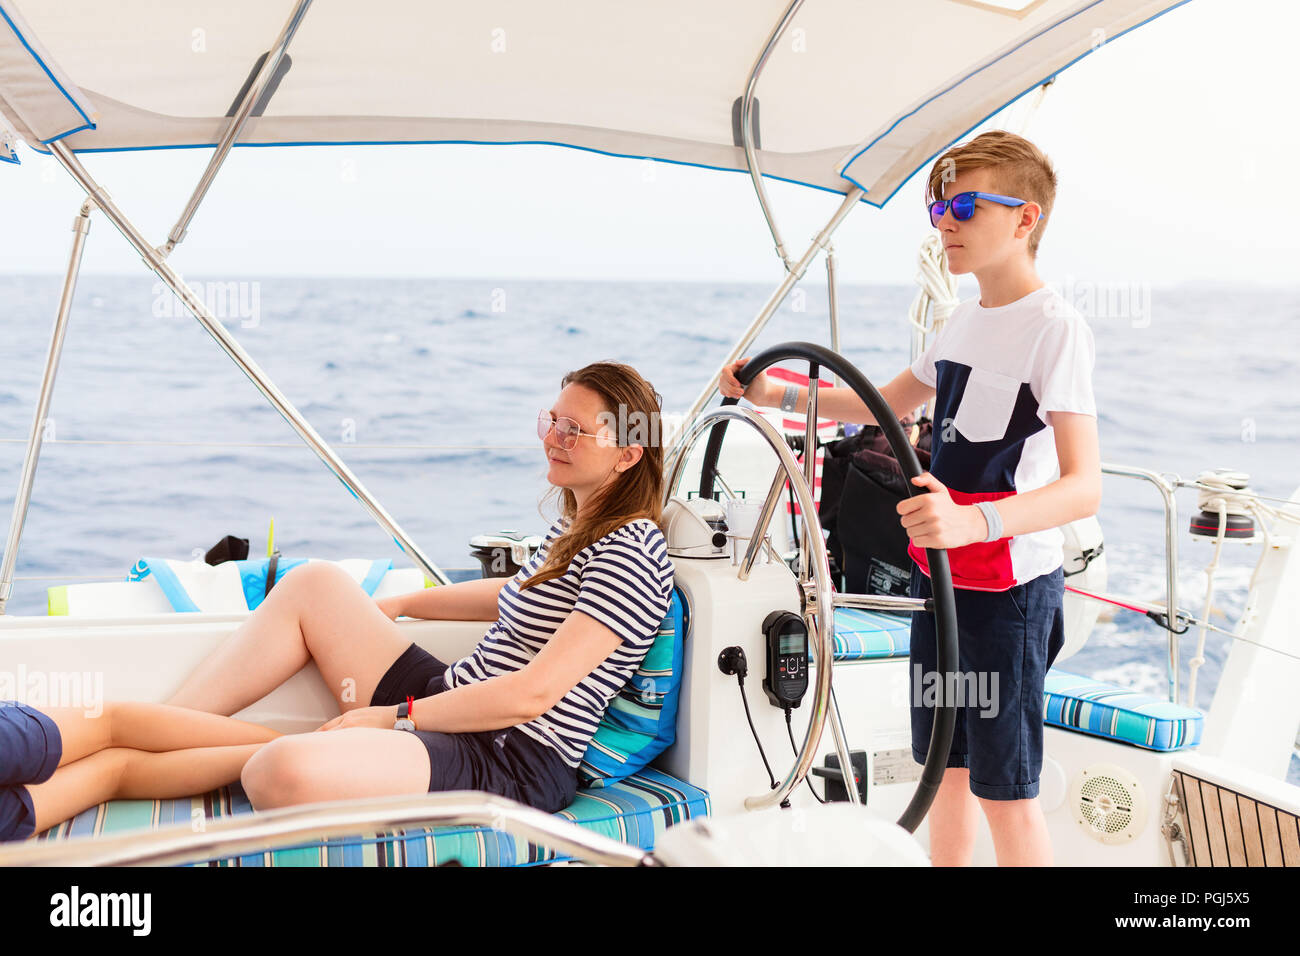 Familia de madre e hijo a bordo del velero que aventura de viaje de verano Foto de stock